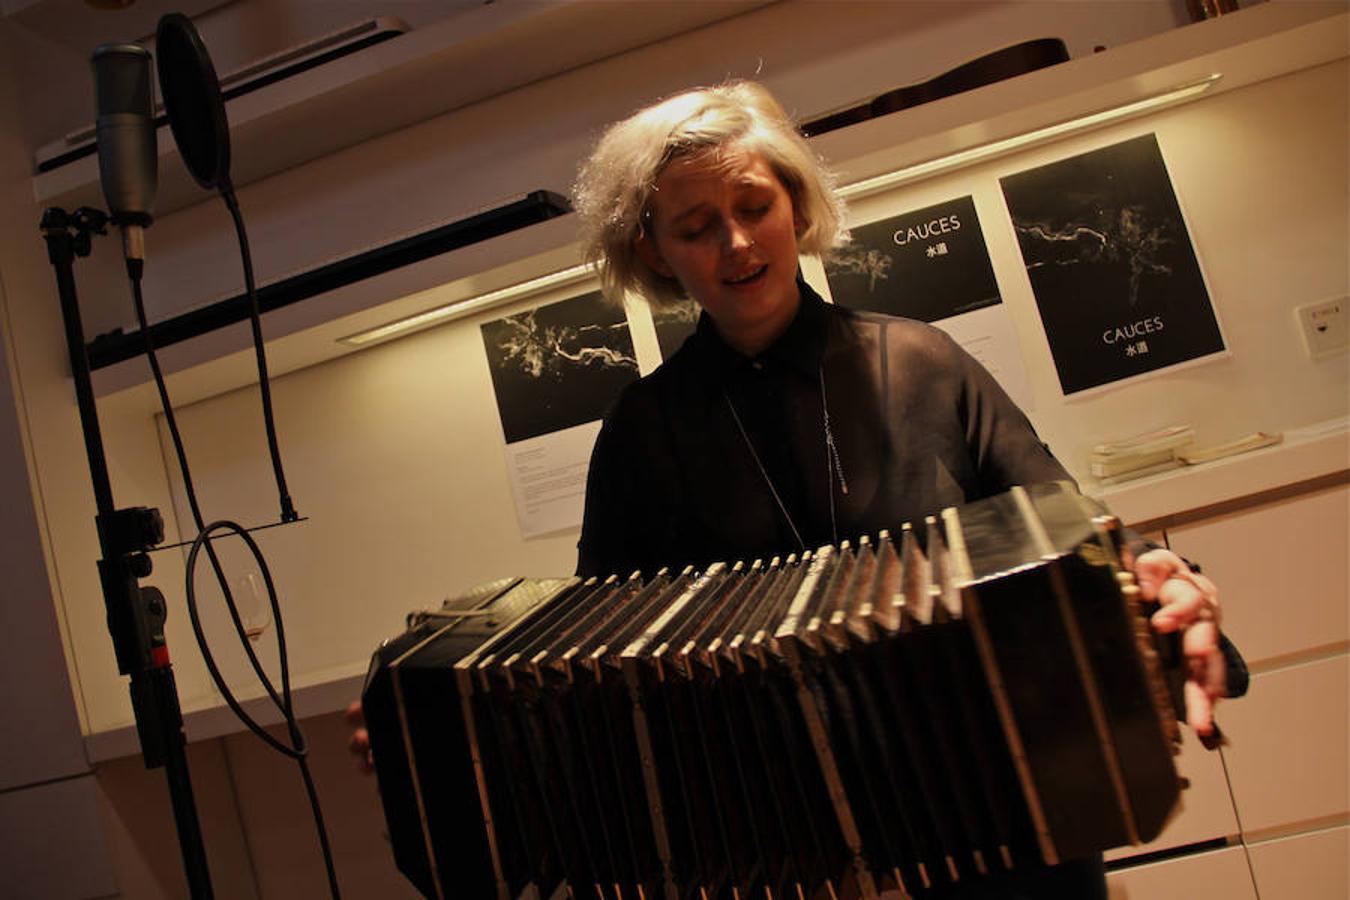 La música argentina Josefina Rozenwasser está adaptando poemas centenarios en mandarín a ritmos latinos contemporáneos